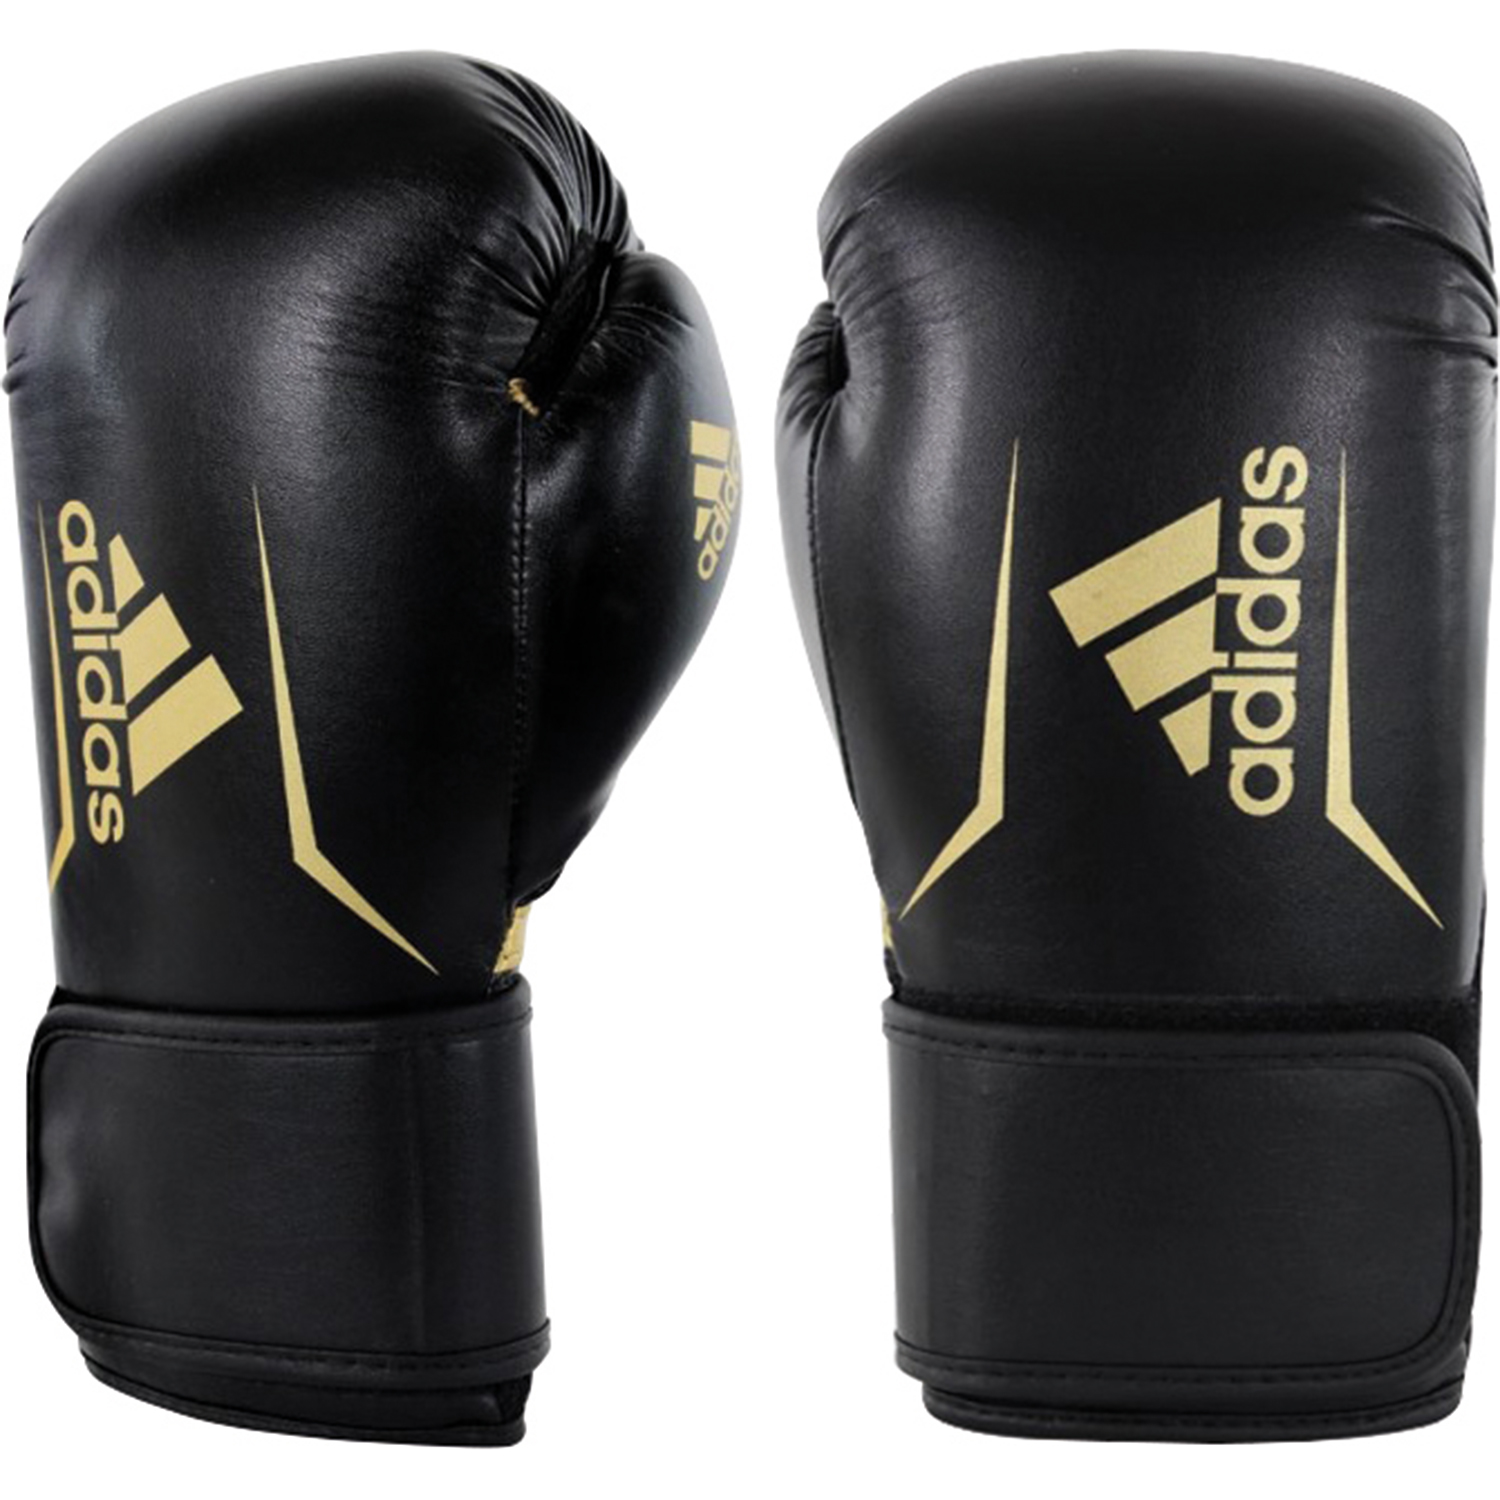 Adidas Speed 100 boxing gloves black/gold 14 oz